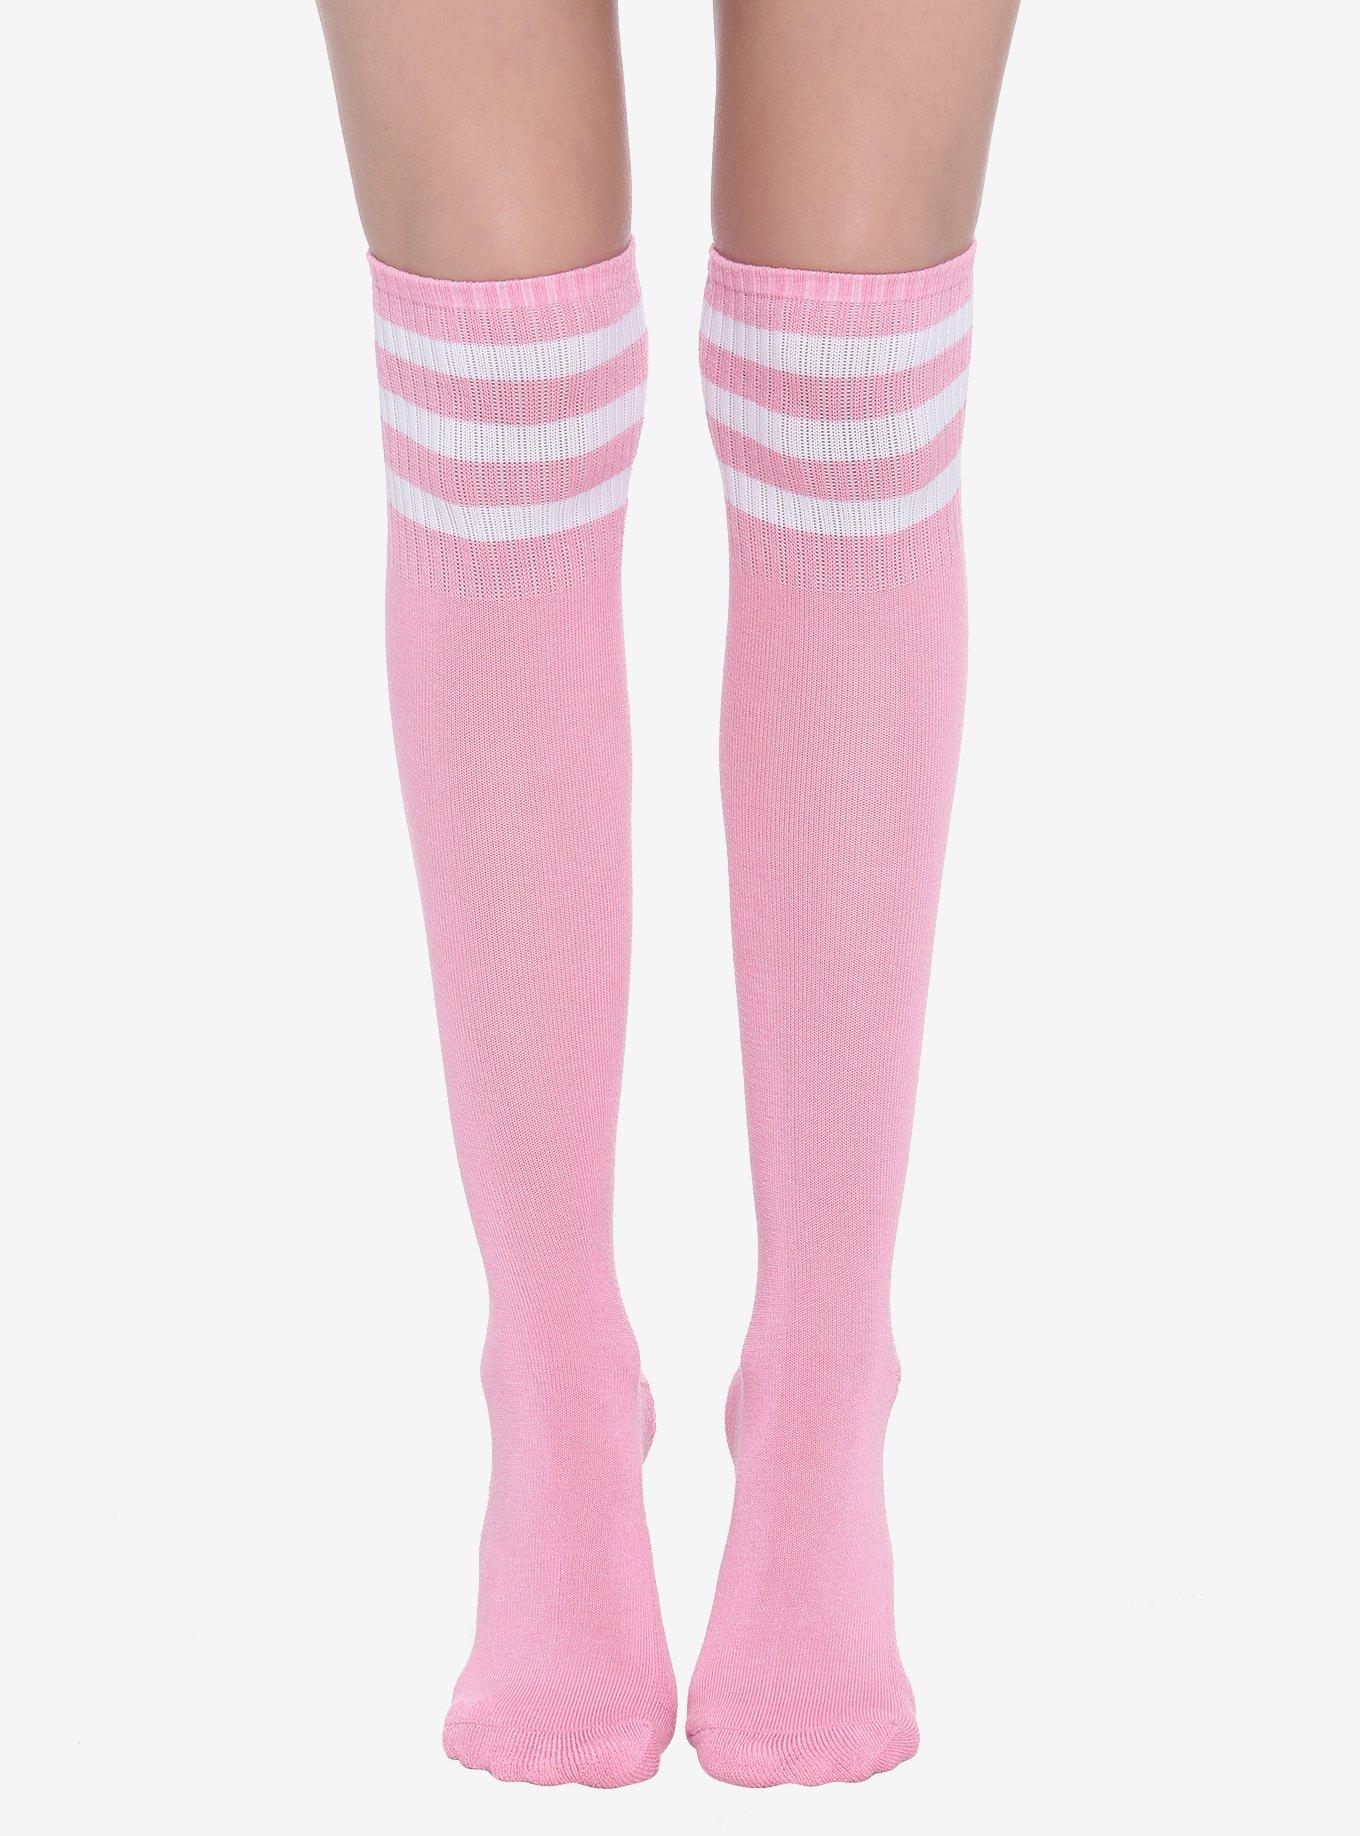  Pink Knee High Socks